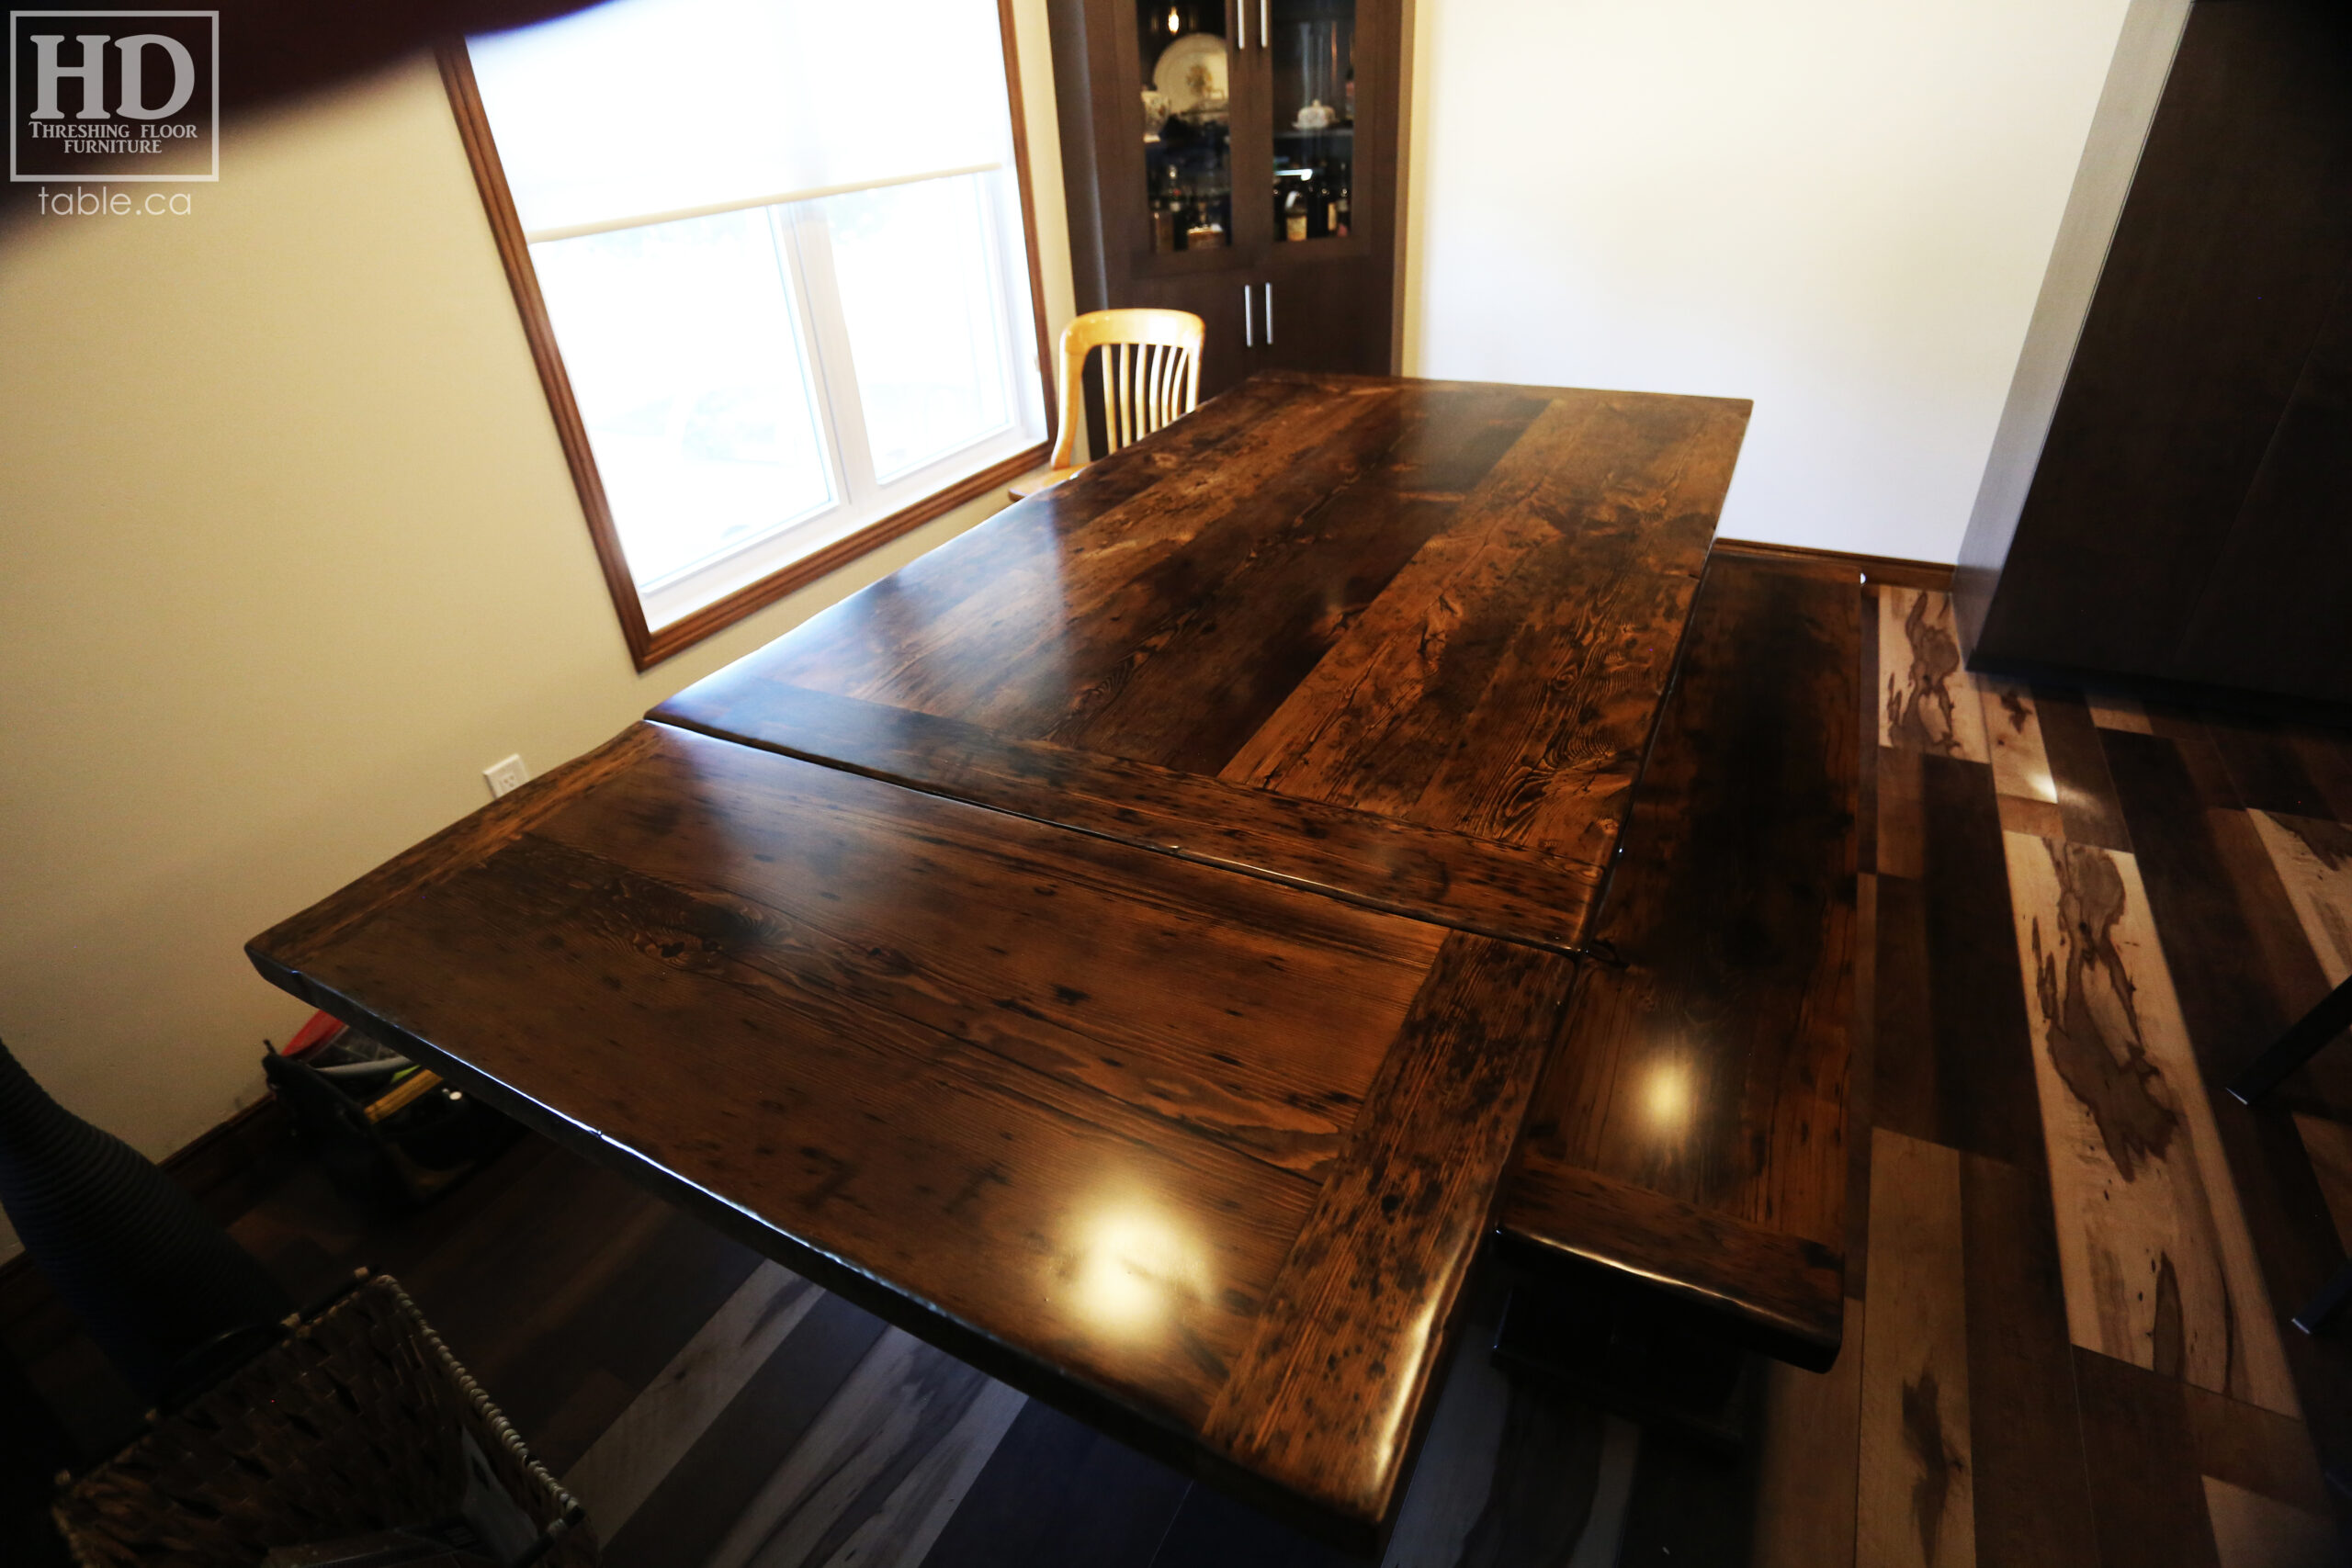 Dark Reclaimed Wood Table by HD Threshing Floor Furniture / www.table.ca